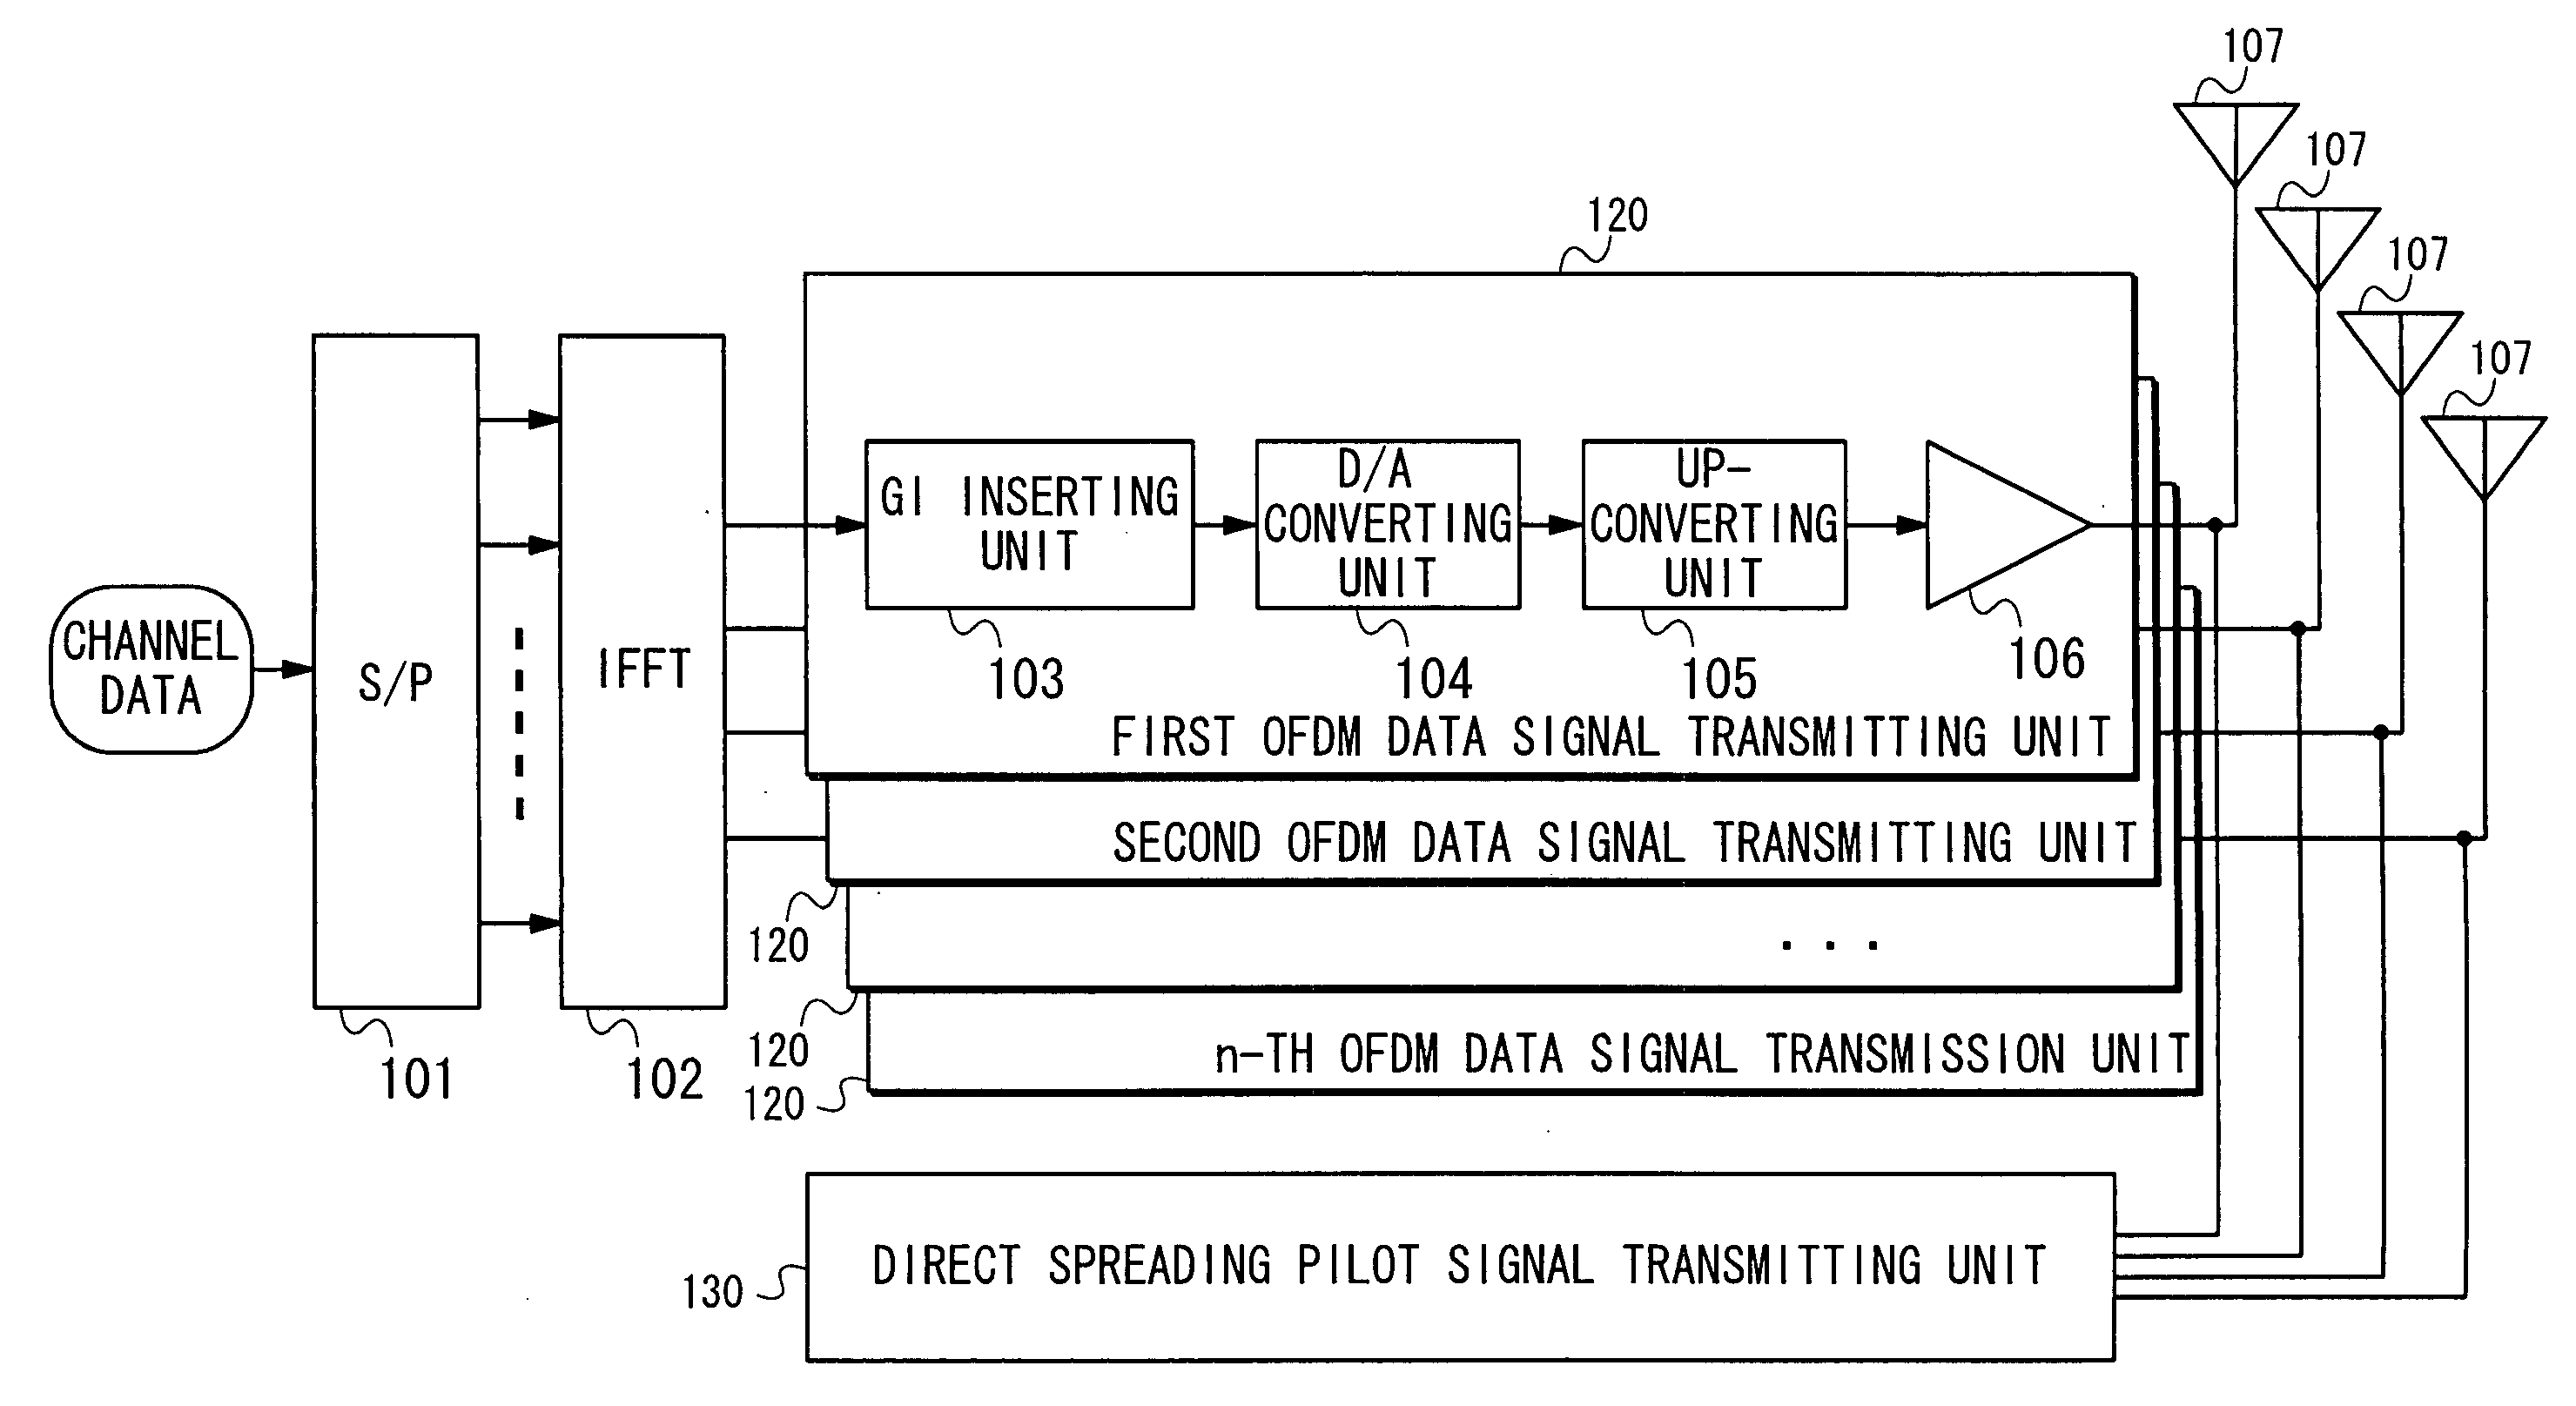 MIMO-OFDM transmitter